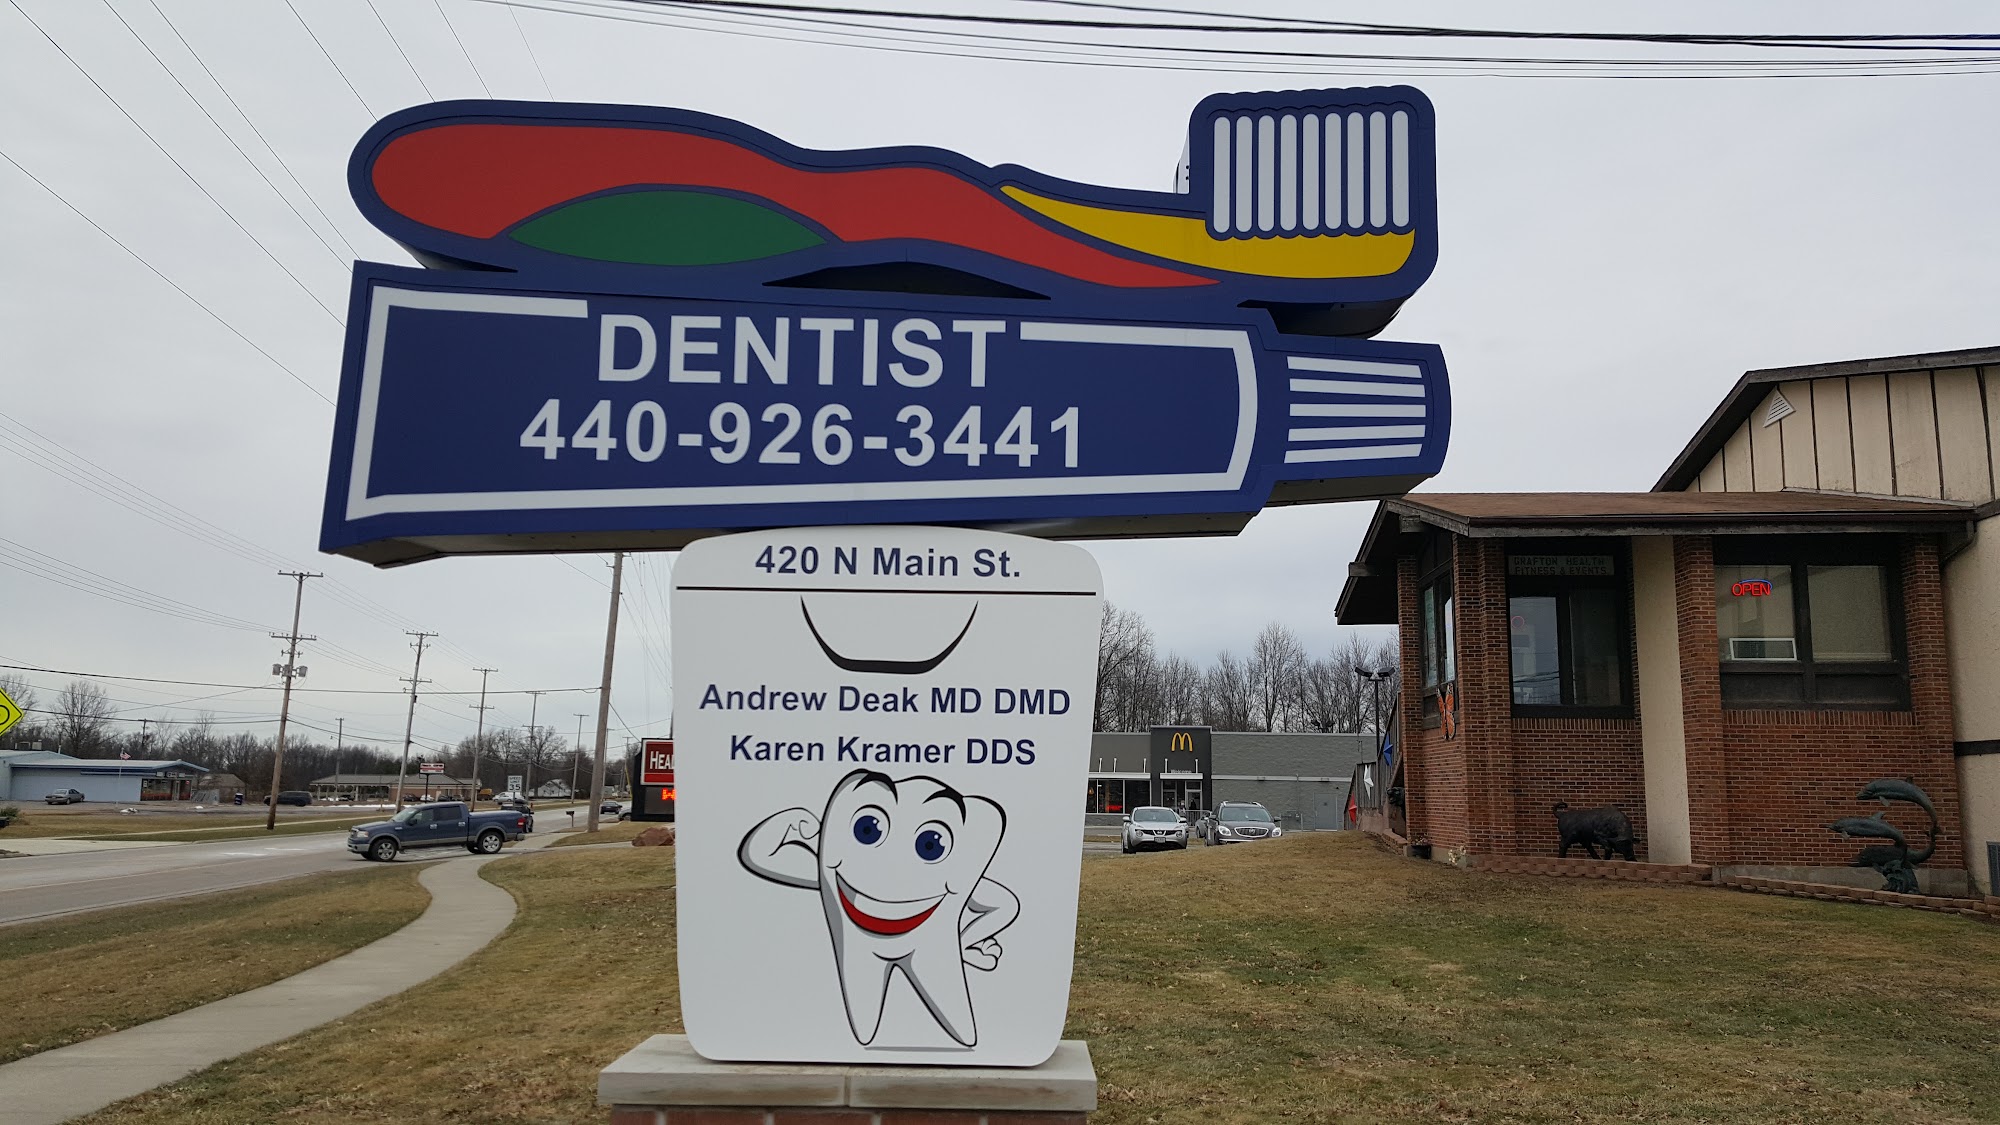 Minnillo & Marshall General Dentists- Grafton 420 Main St, Grafton Ohio 44044